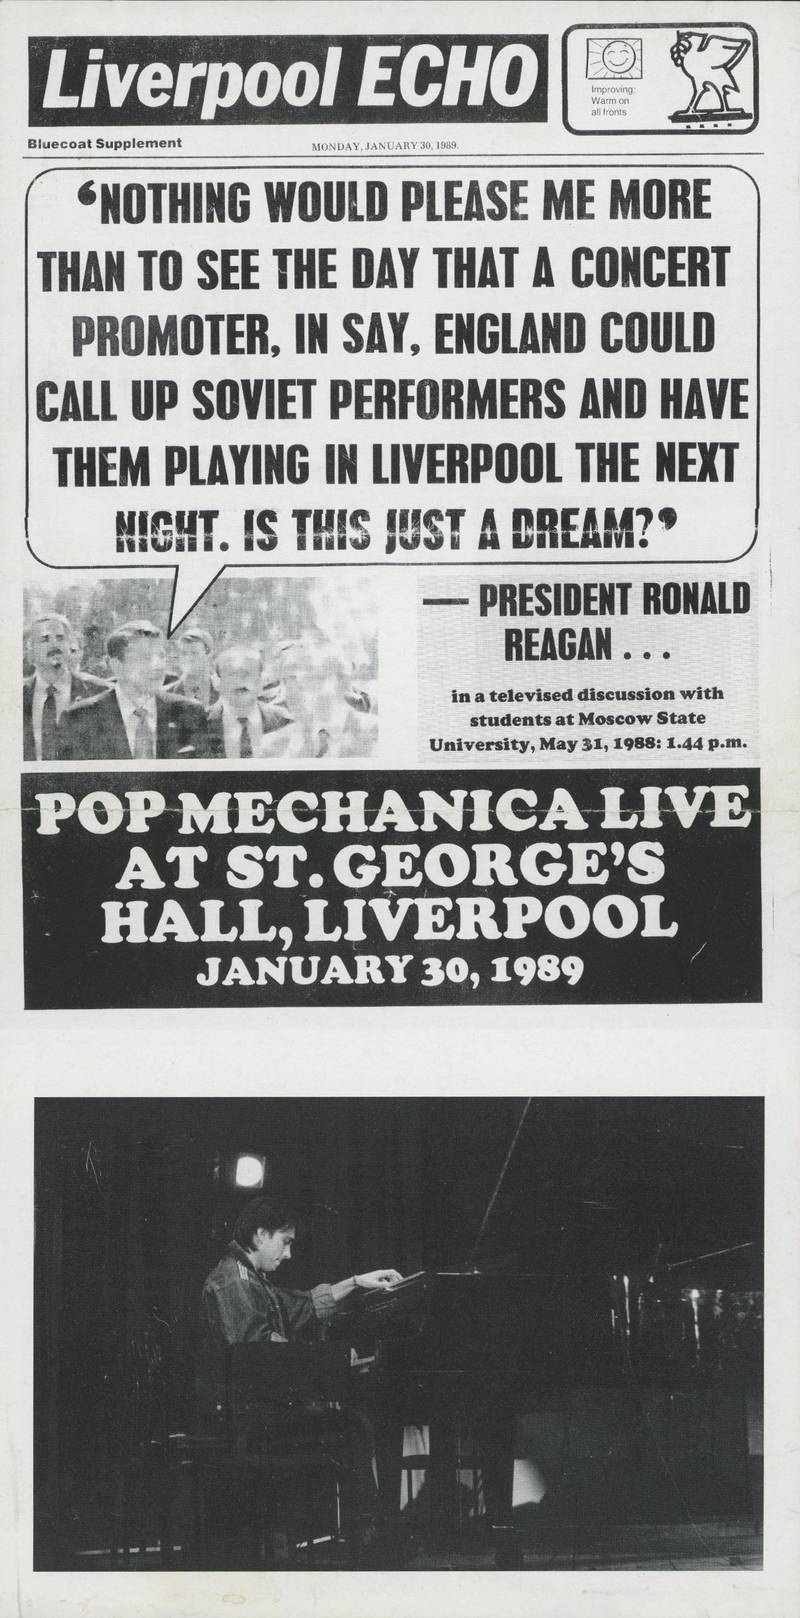 Pop Mechanica Live at St. George's Hall, Liverpool